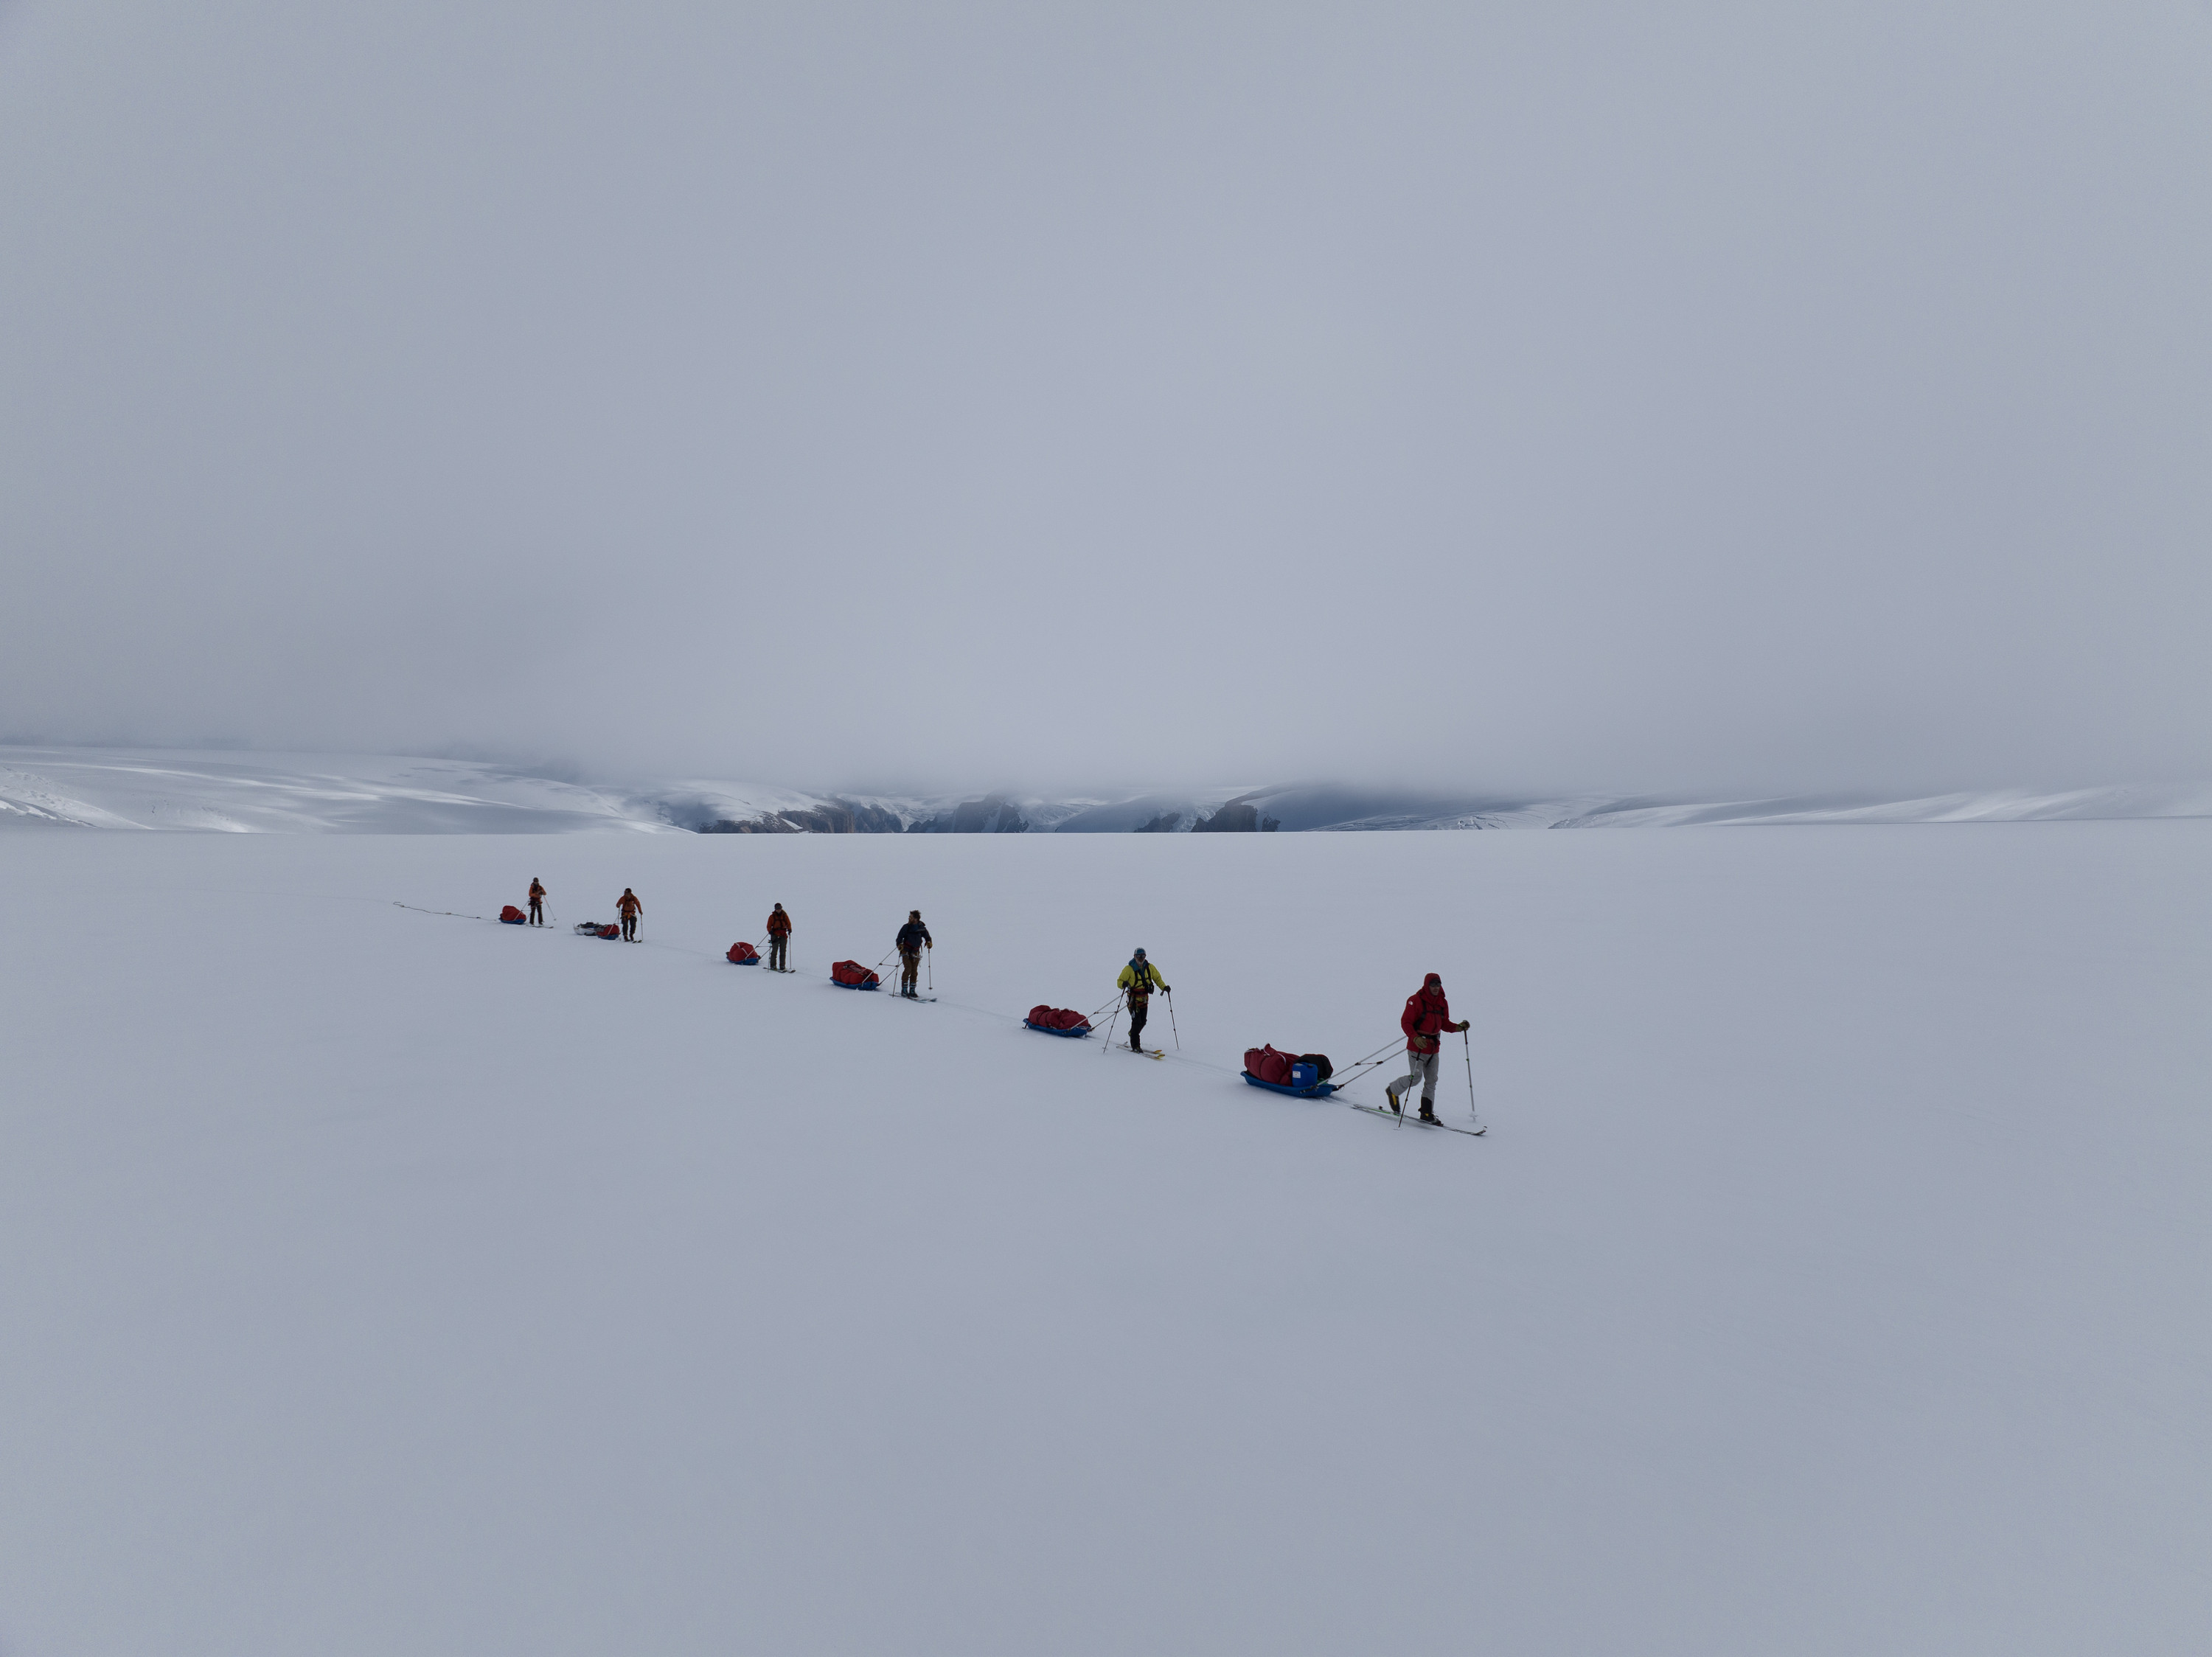 The team trek through the snow on the ice reservoir